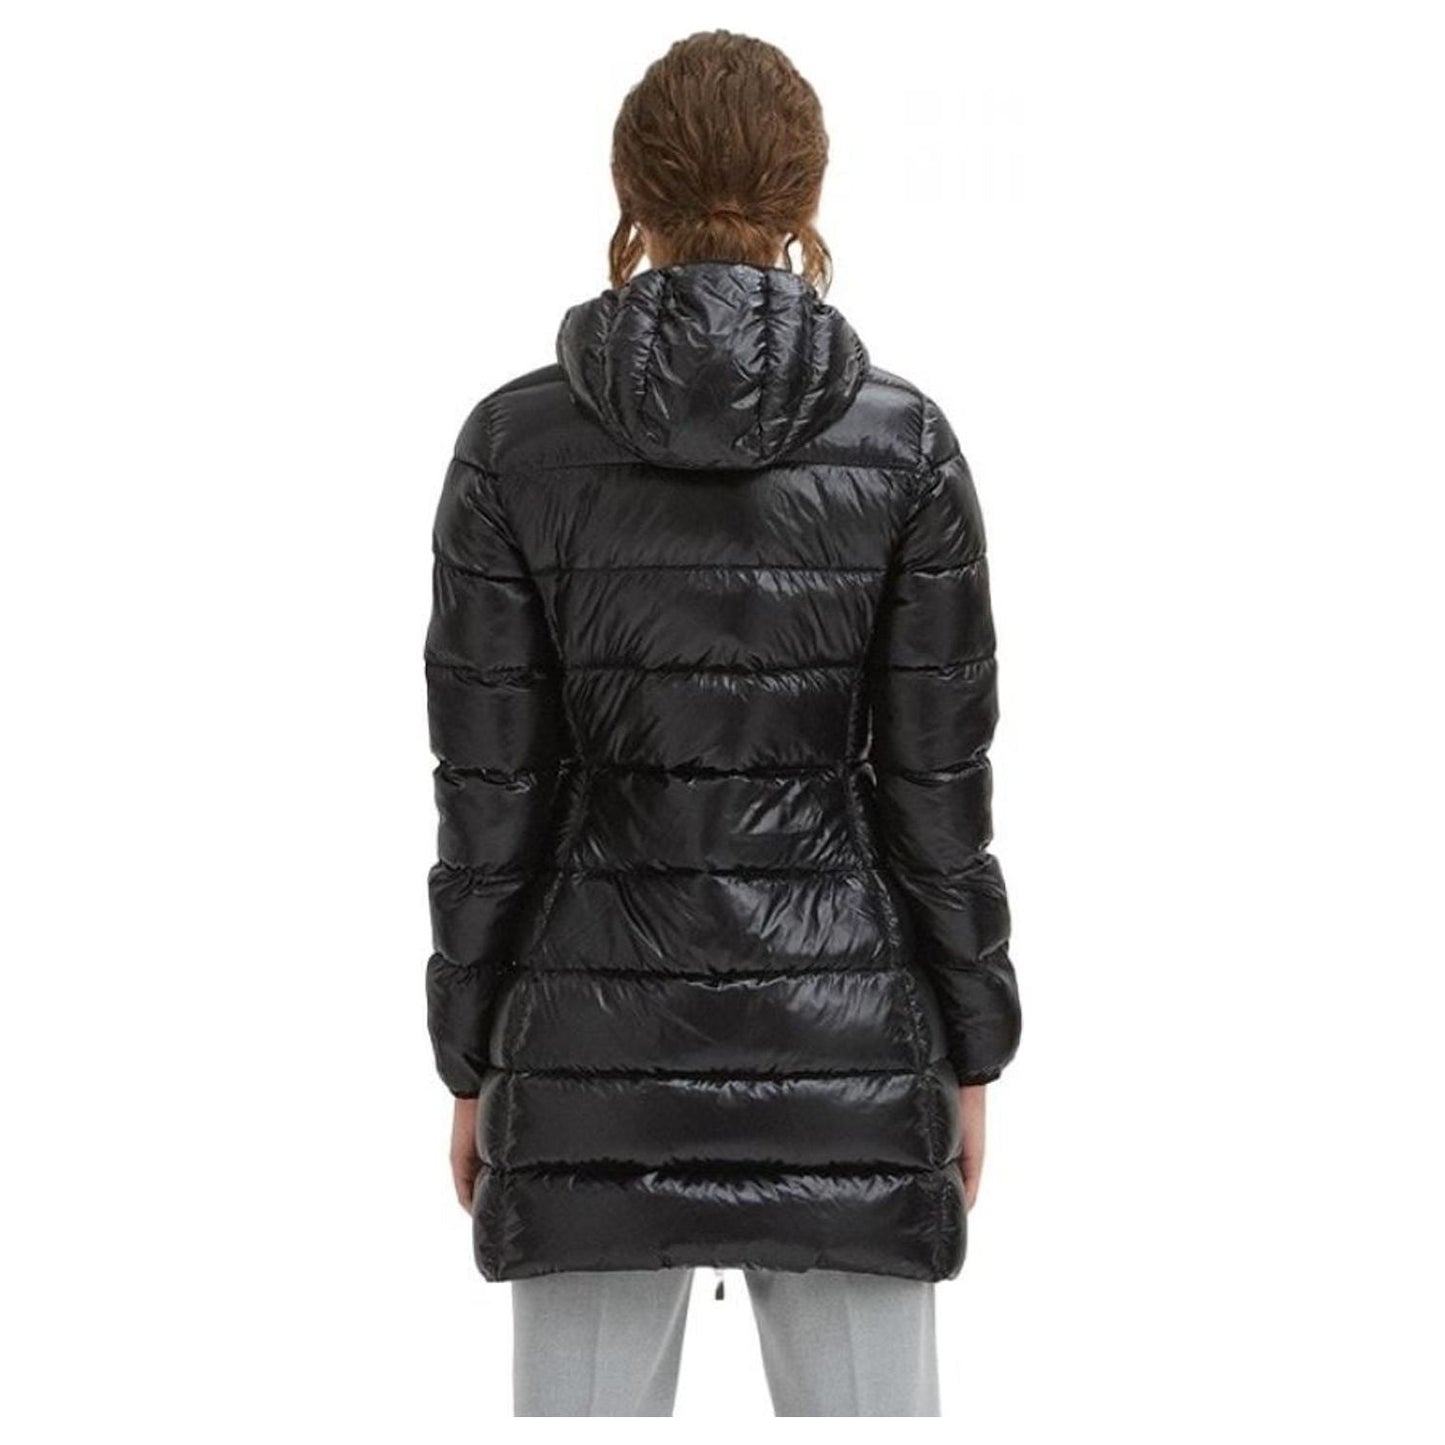 Centogrammi Sleek Nylon Down Jacket with Hood black-nylon-jackets-coat-3 product-8588-876008540-8005f1a5-4ba.jpg